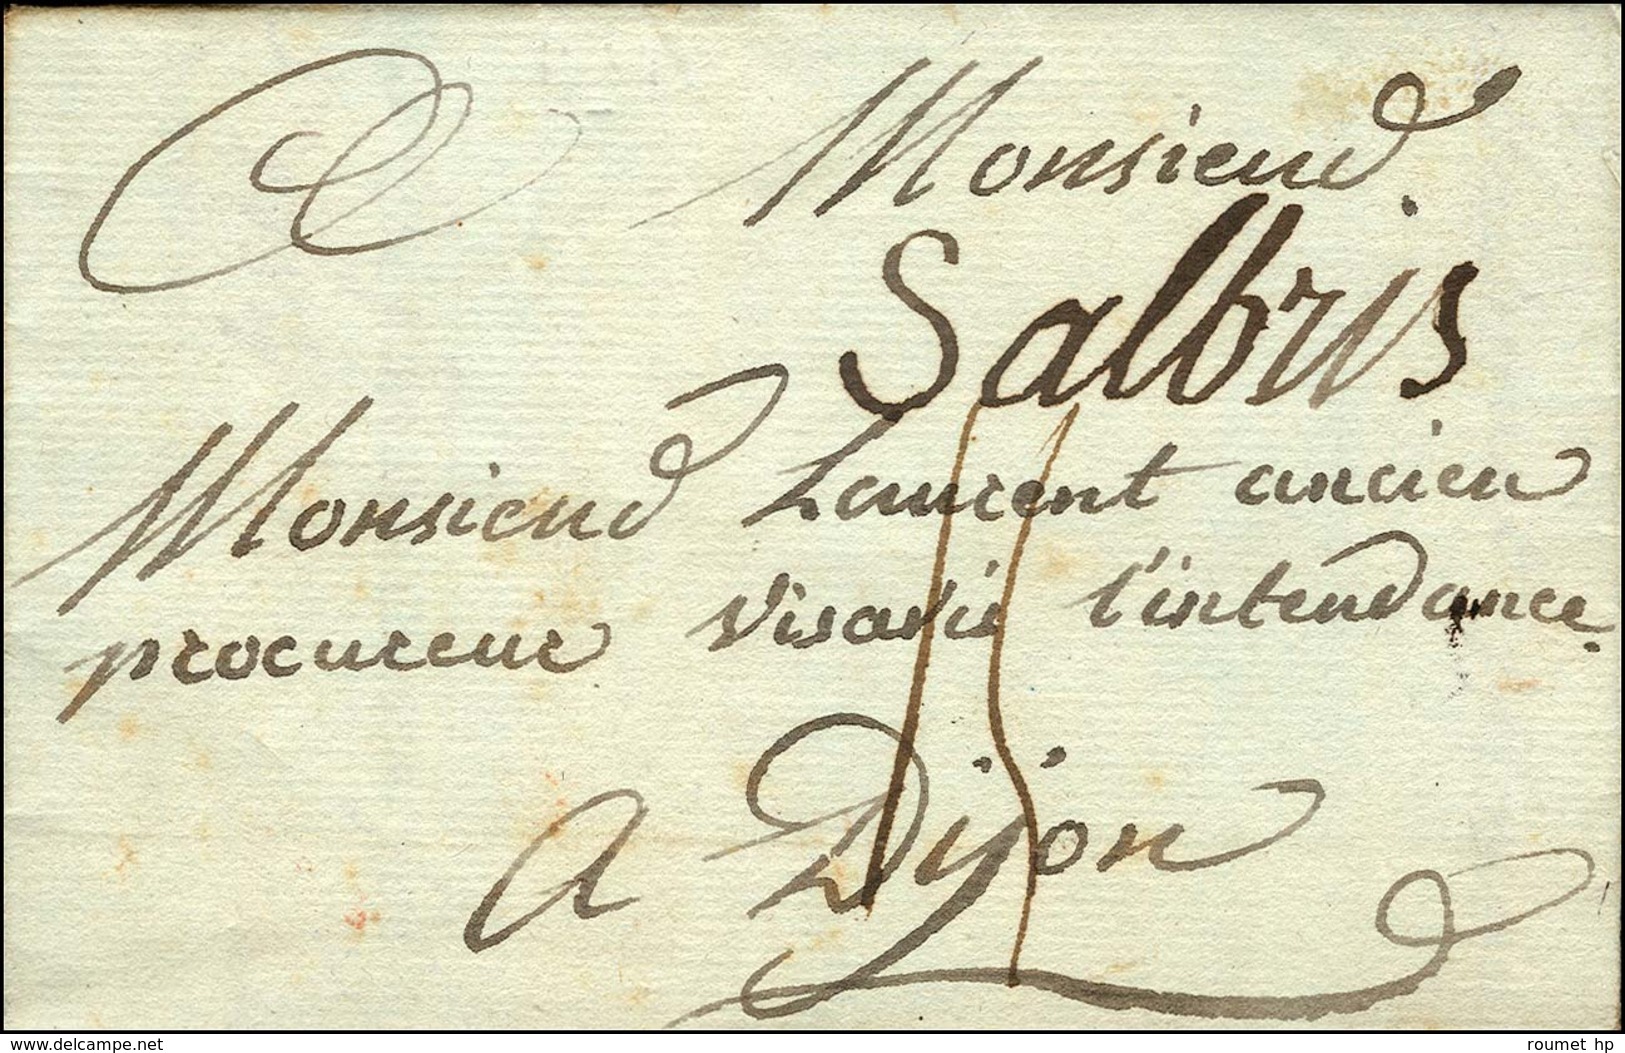 '' Salbris '' (L N° 1). 1784. (cote : 450). - TB. - 1701-1800: Precursors XVIII